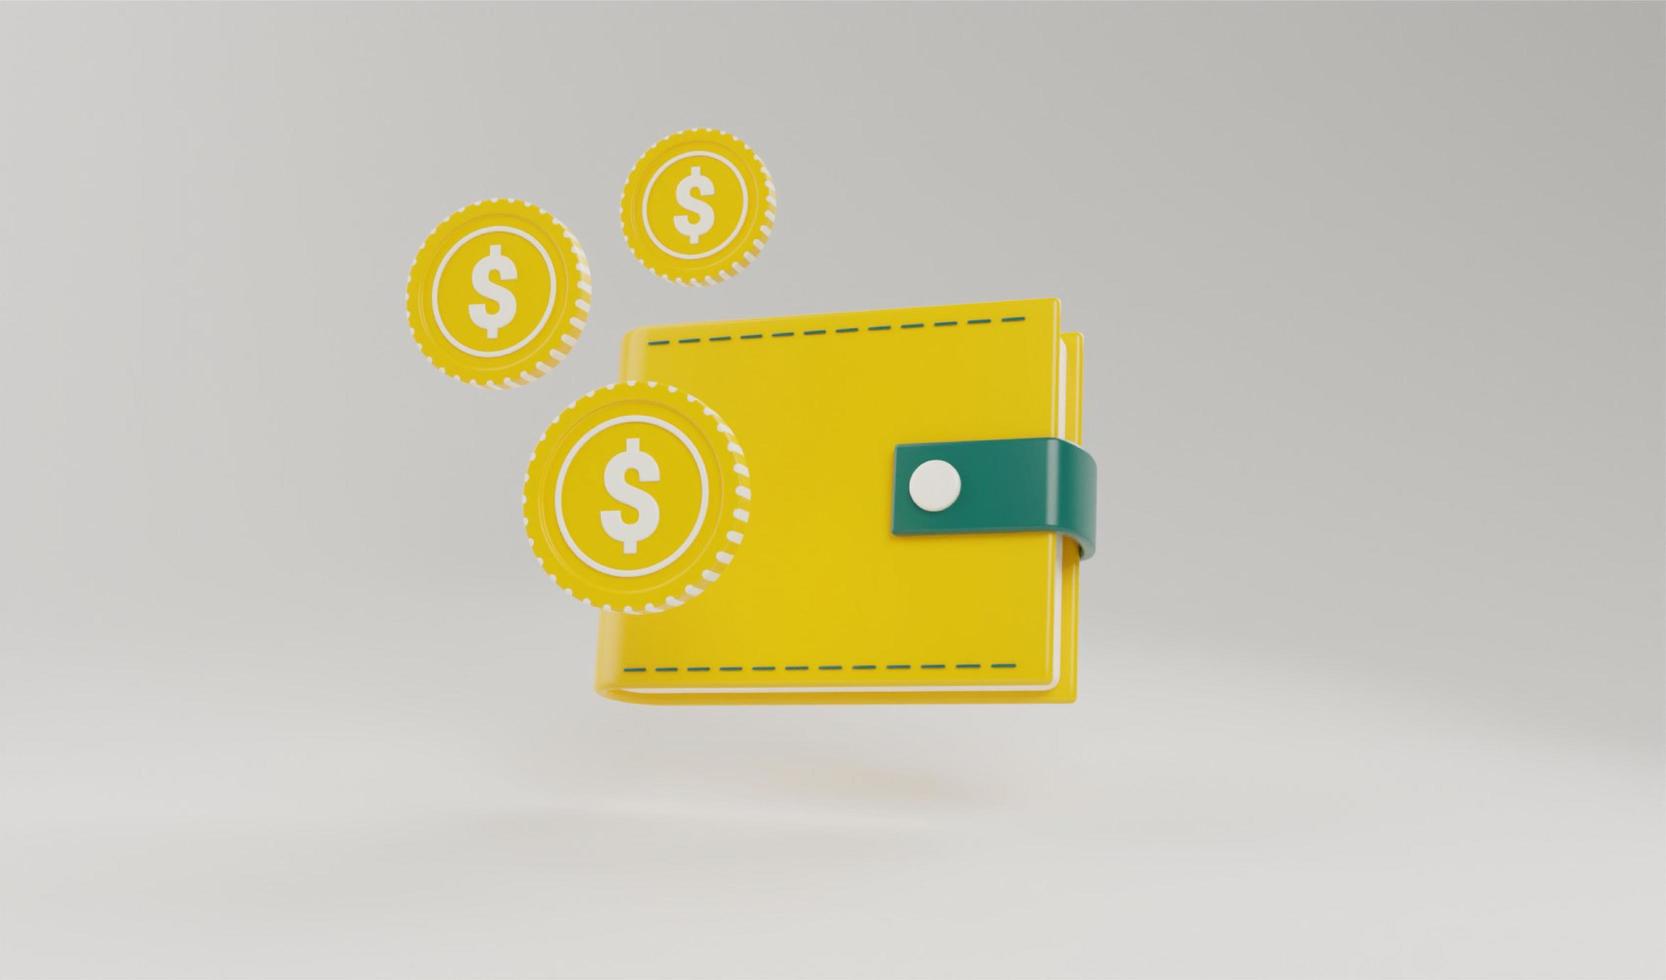 Cartera de representación 3d con ahorro de dinero, factura, pila de monedas flotantes e ilustración del concepto de tarjeta de crédito foto